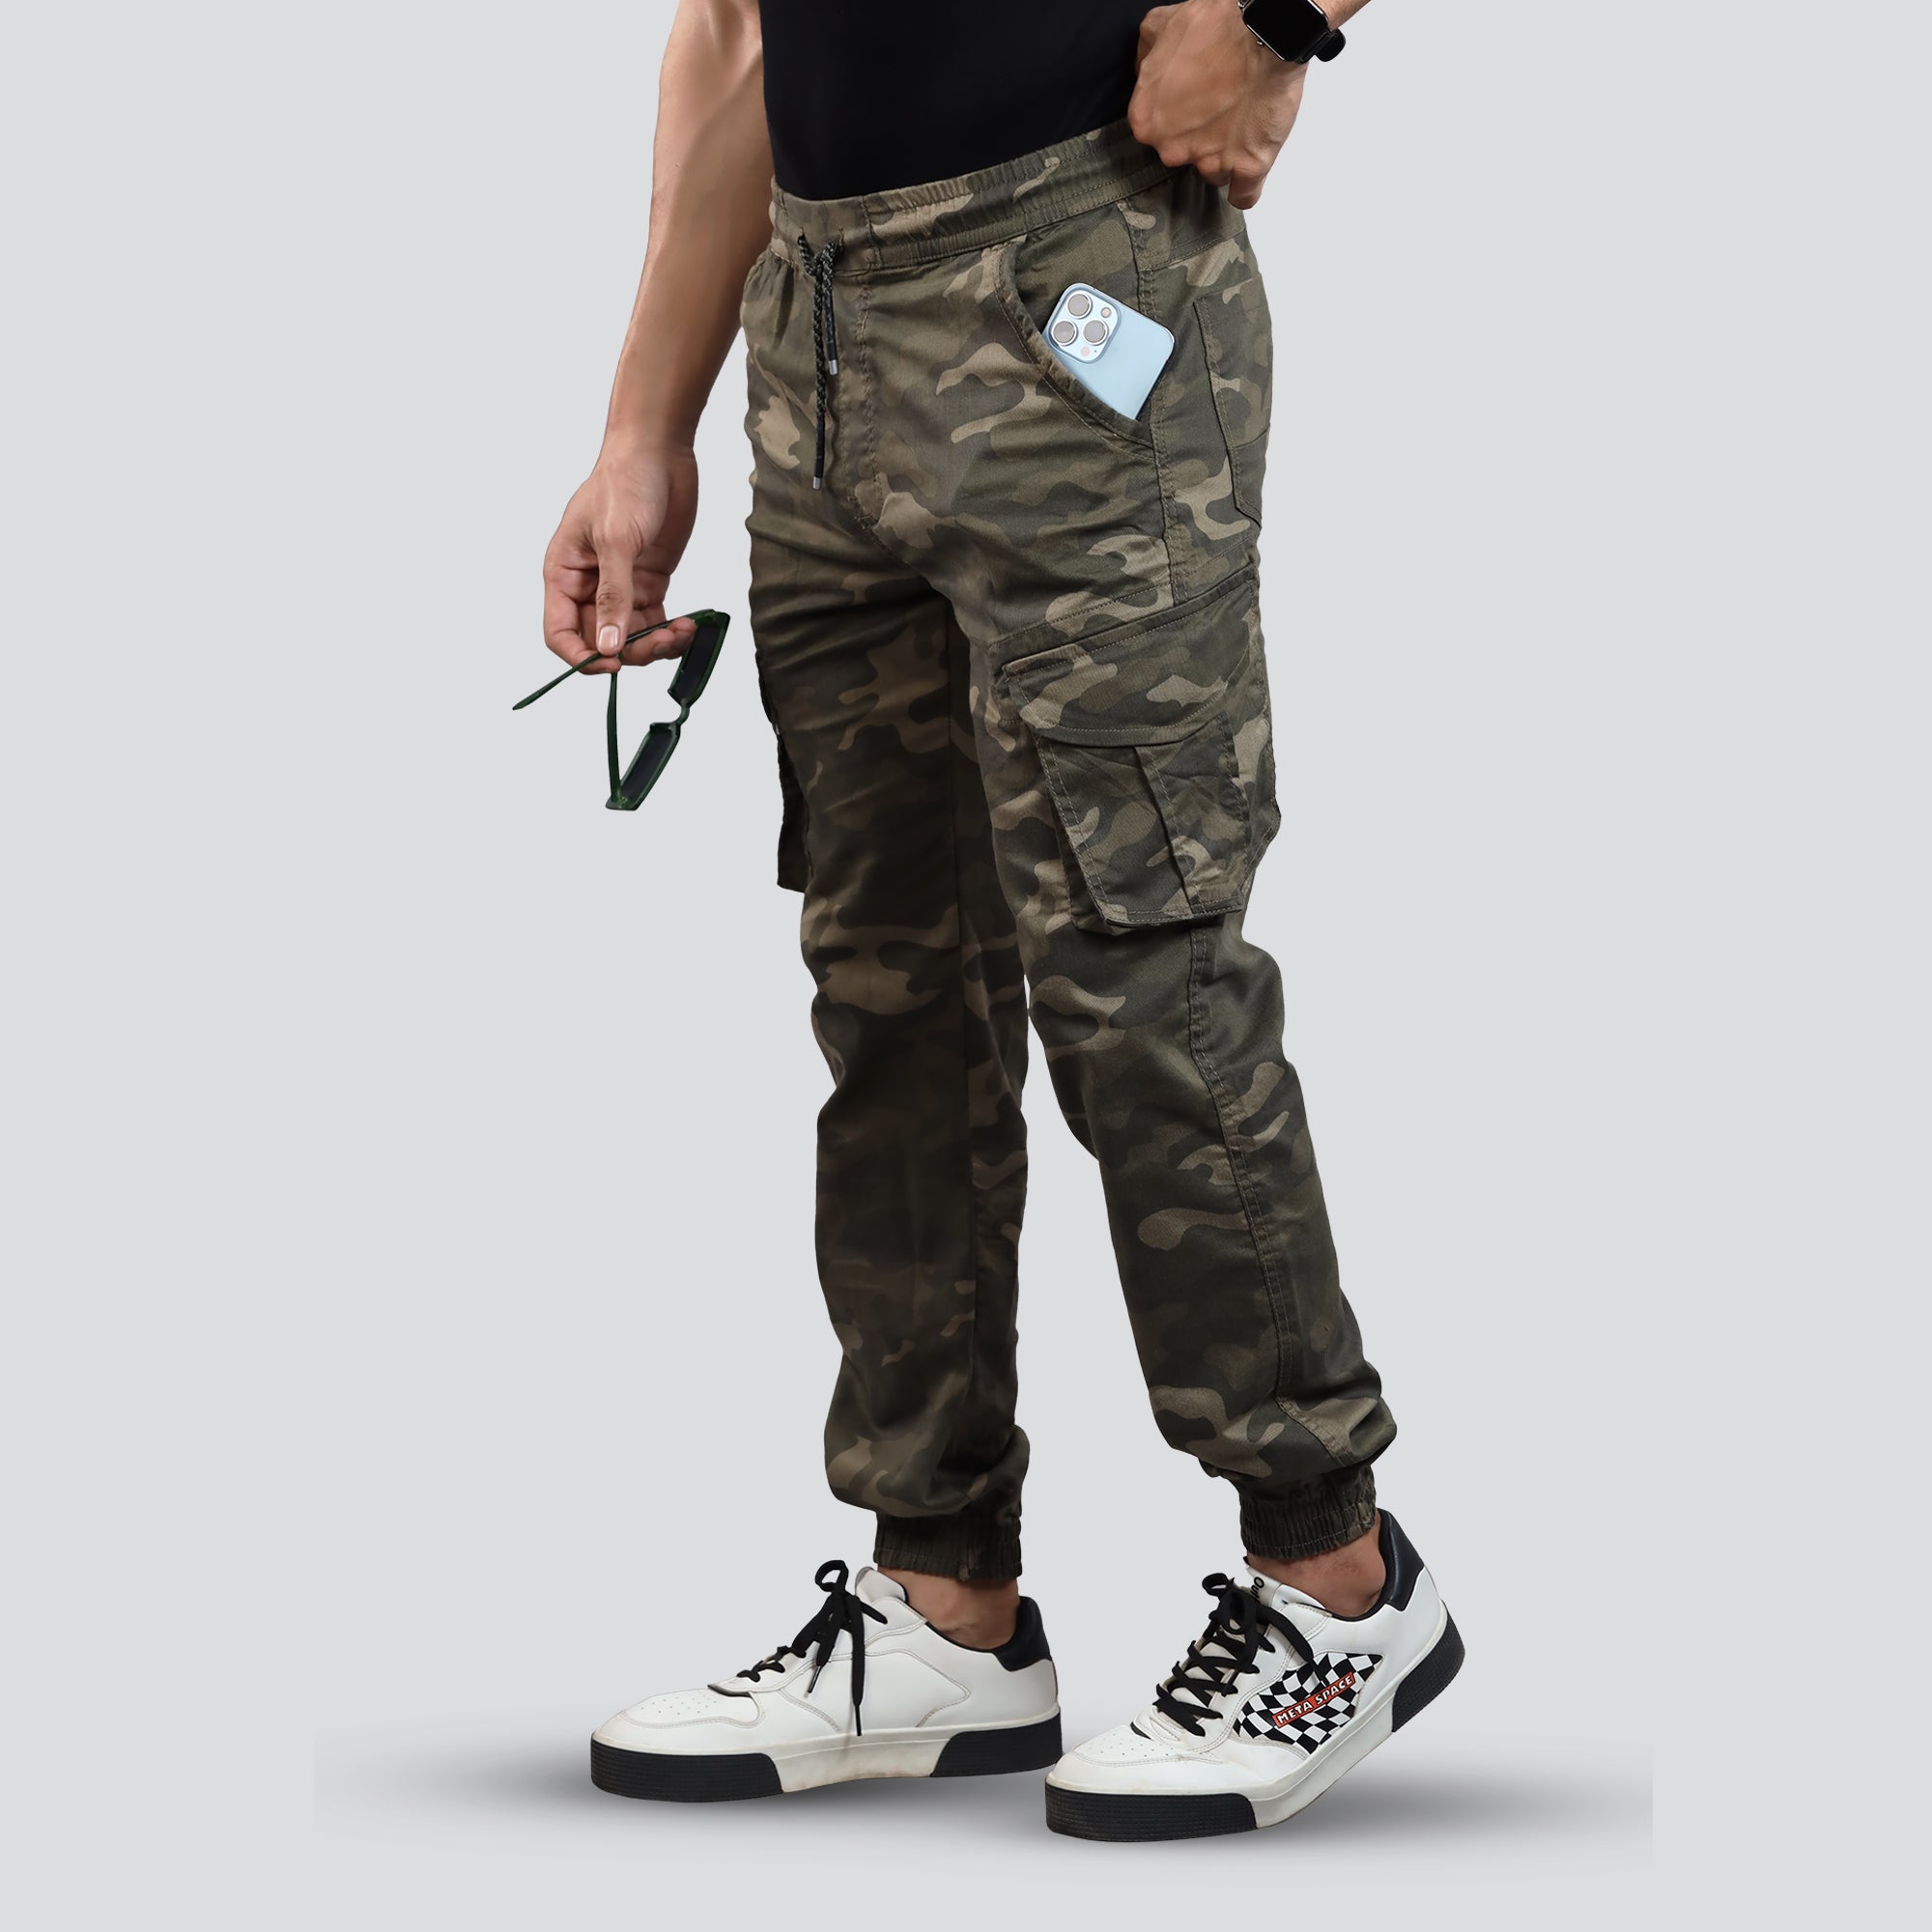 RYDCOT Men Cargo Trousers Work Wear Combat Safety Cargo 6 Pocket Full Pants  Black S - Walmart.com